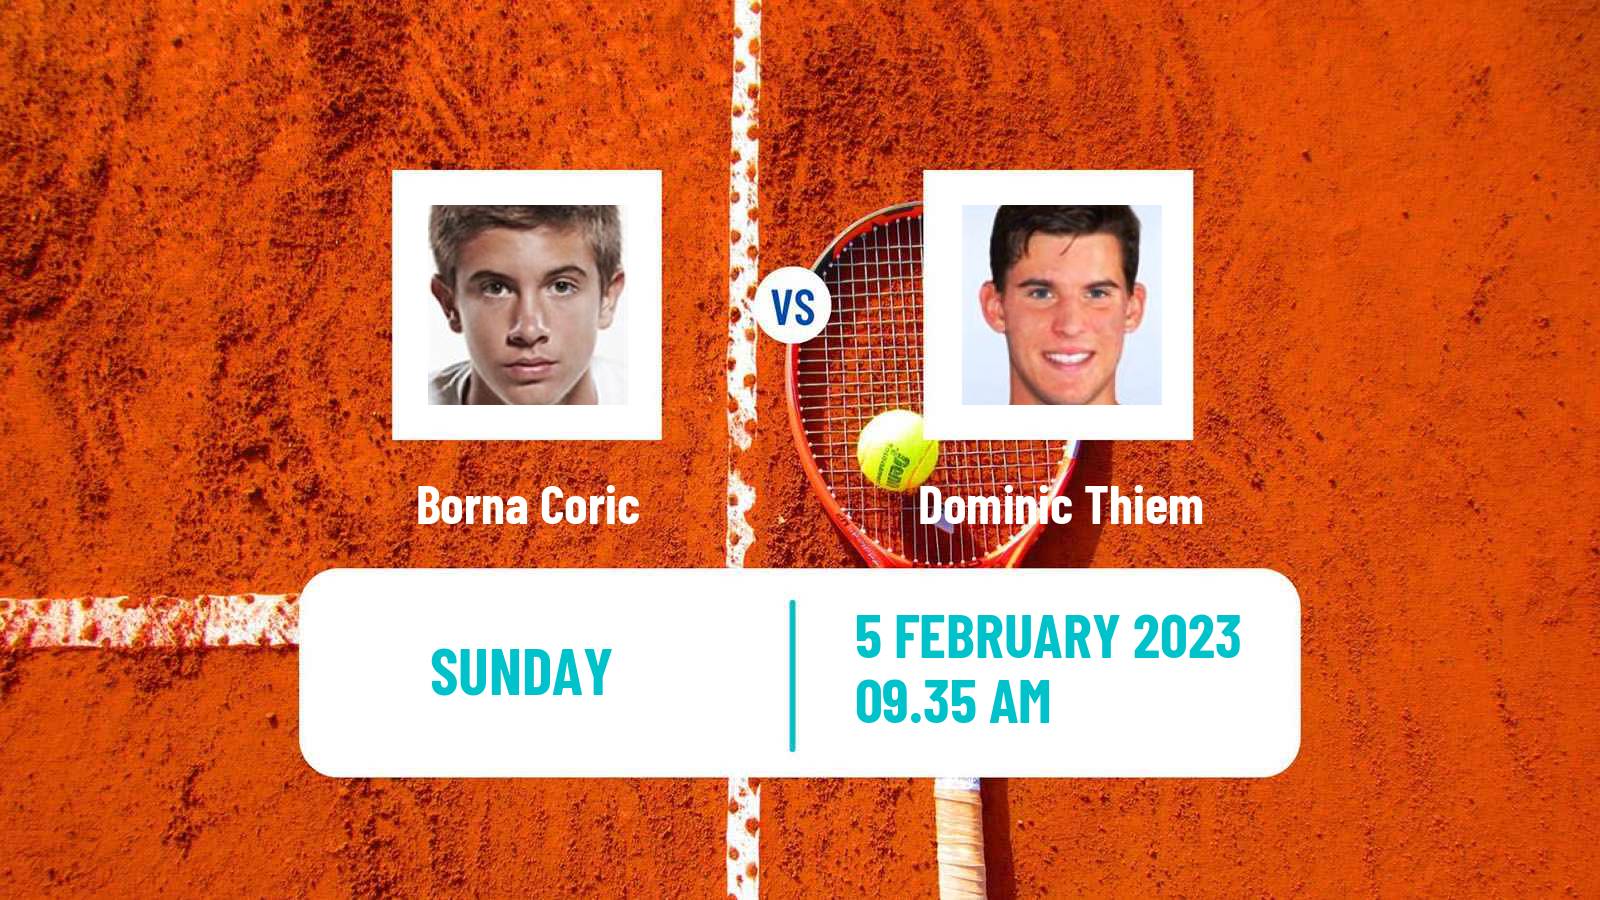 Tennis Davis Cup World Group Borna Coric - Dominic Thiem